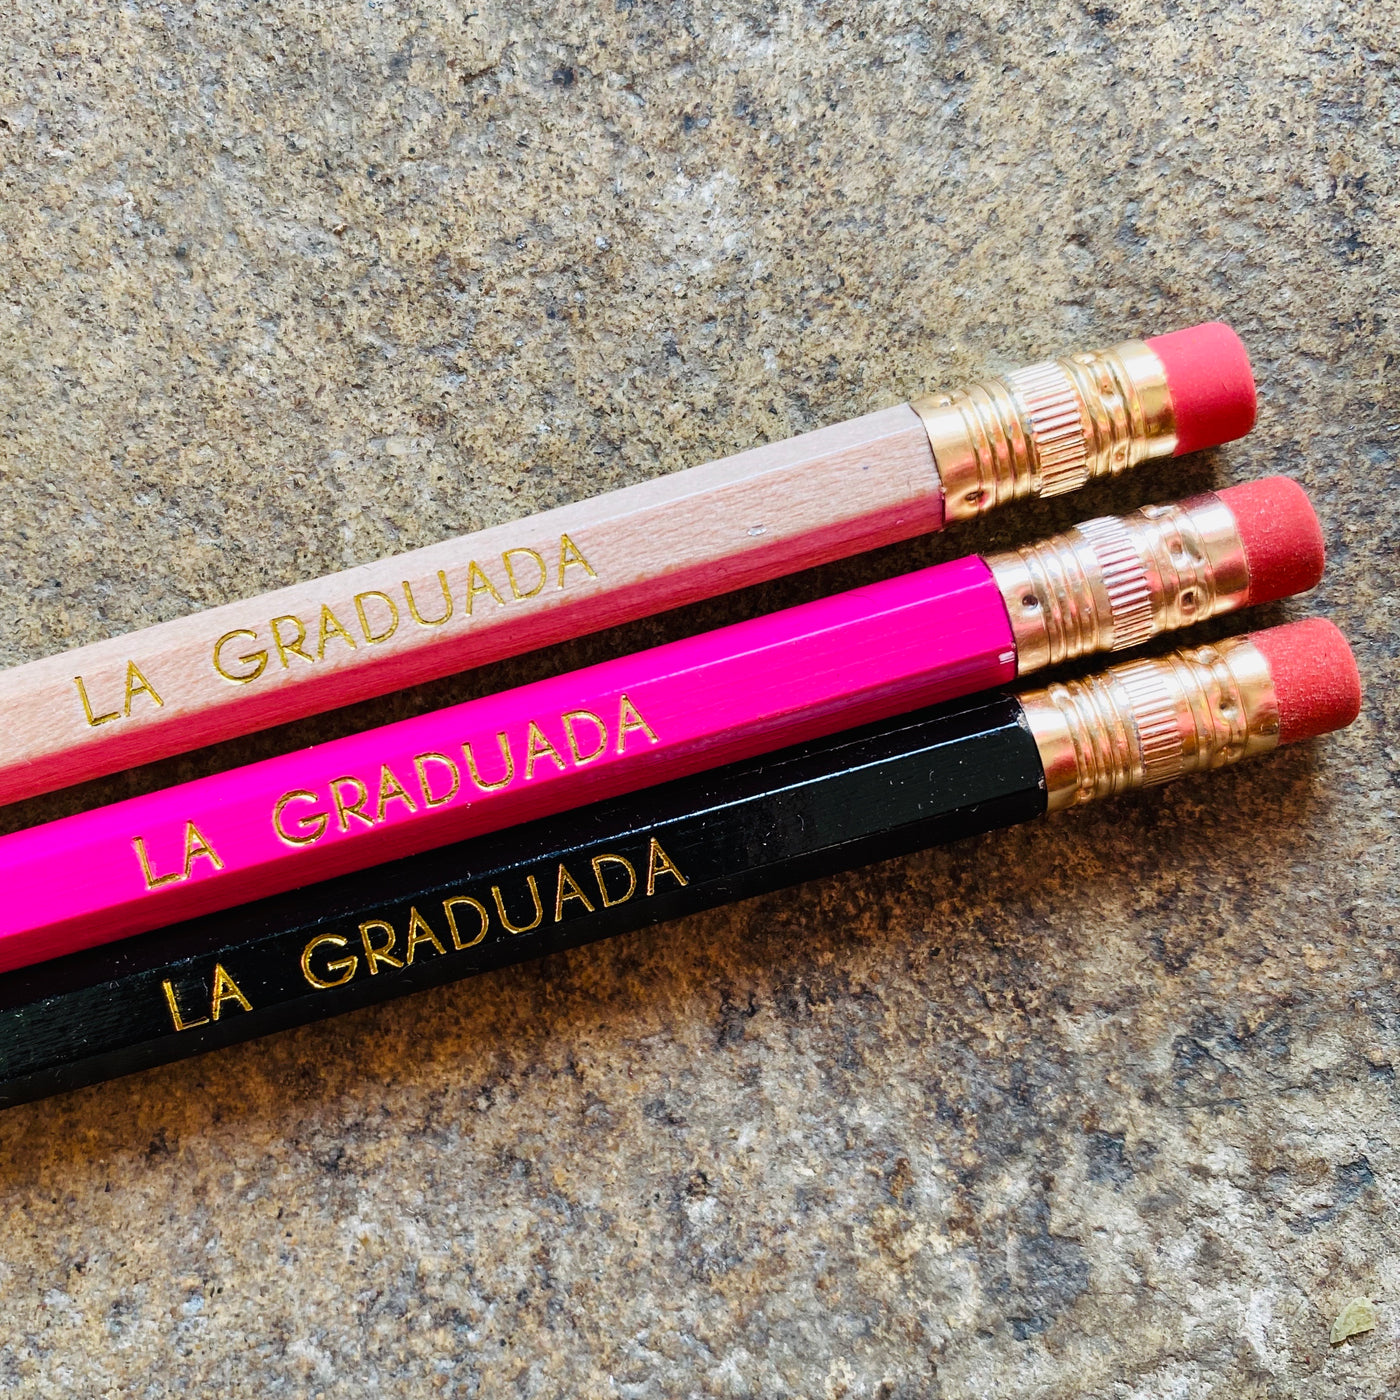 La Graduada phrase pencils featured in natural, pink, and black.